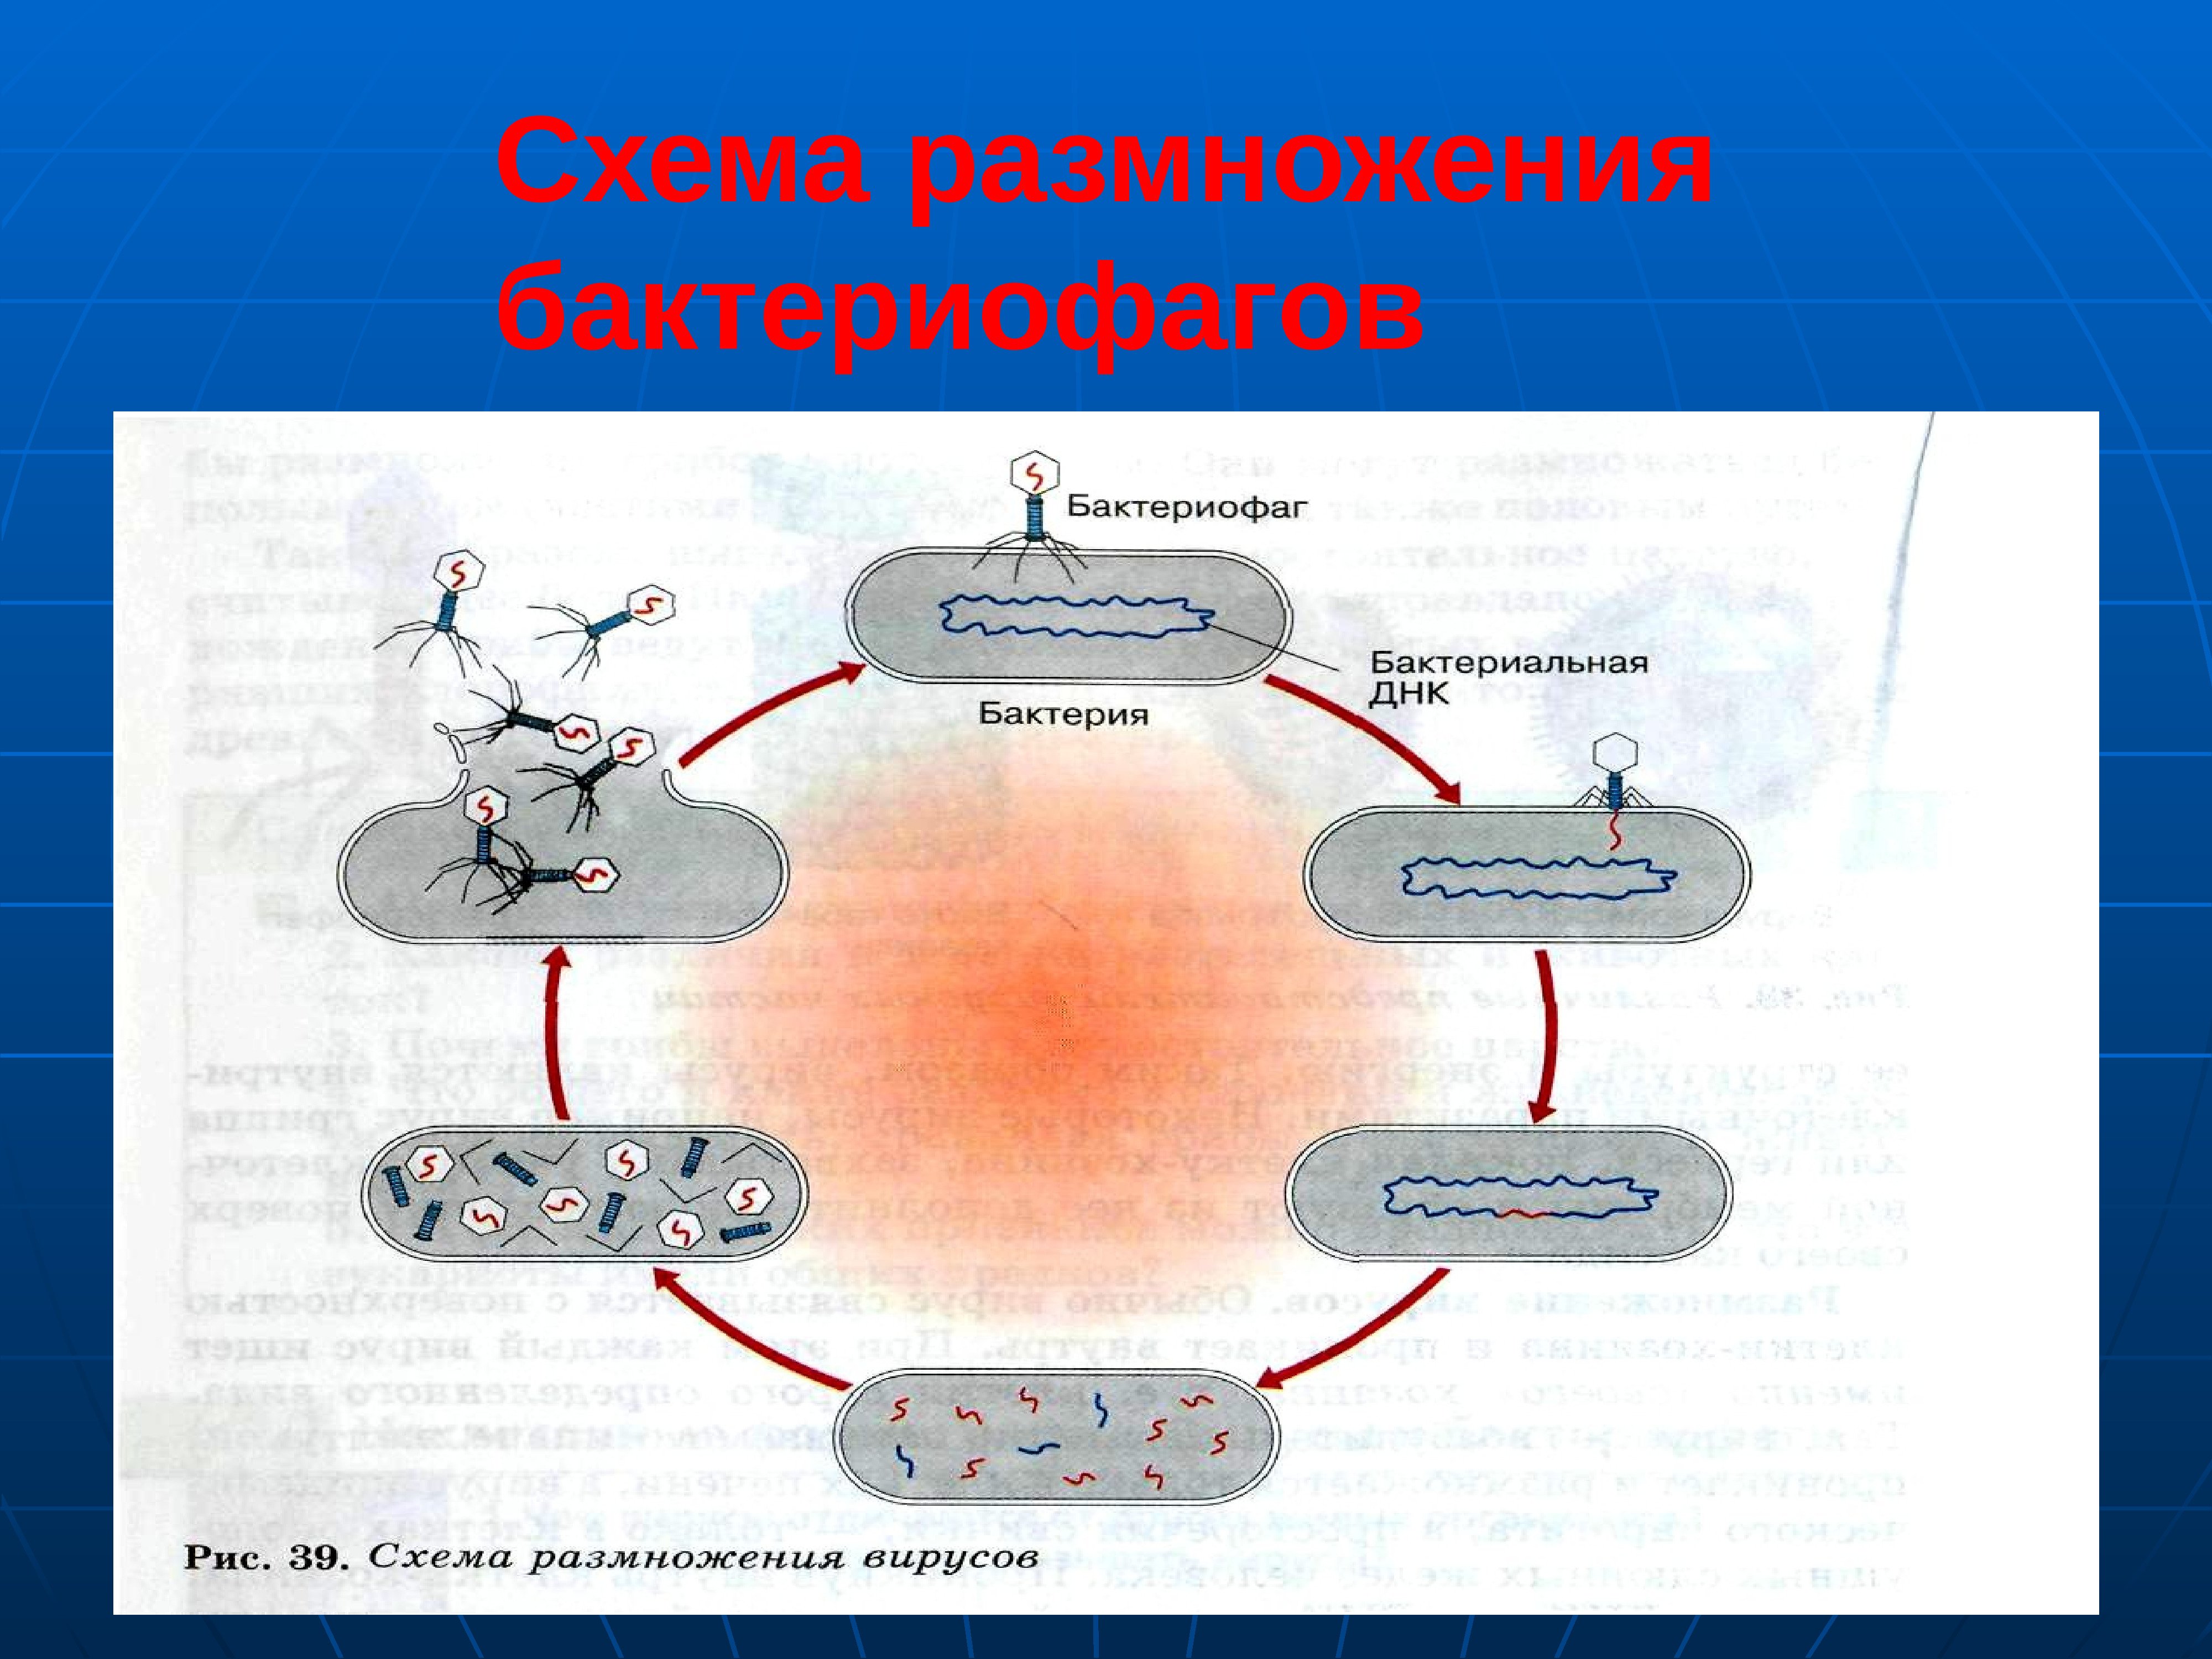 Цикл бактерии. Схема цикла размножения бактериофага. Жизненный цикл бактерий схема. Размножение вируса бактериофага. Размножение вирусов схема.